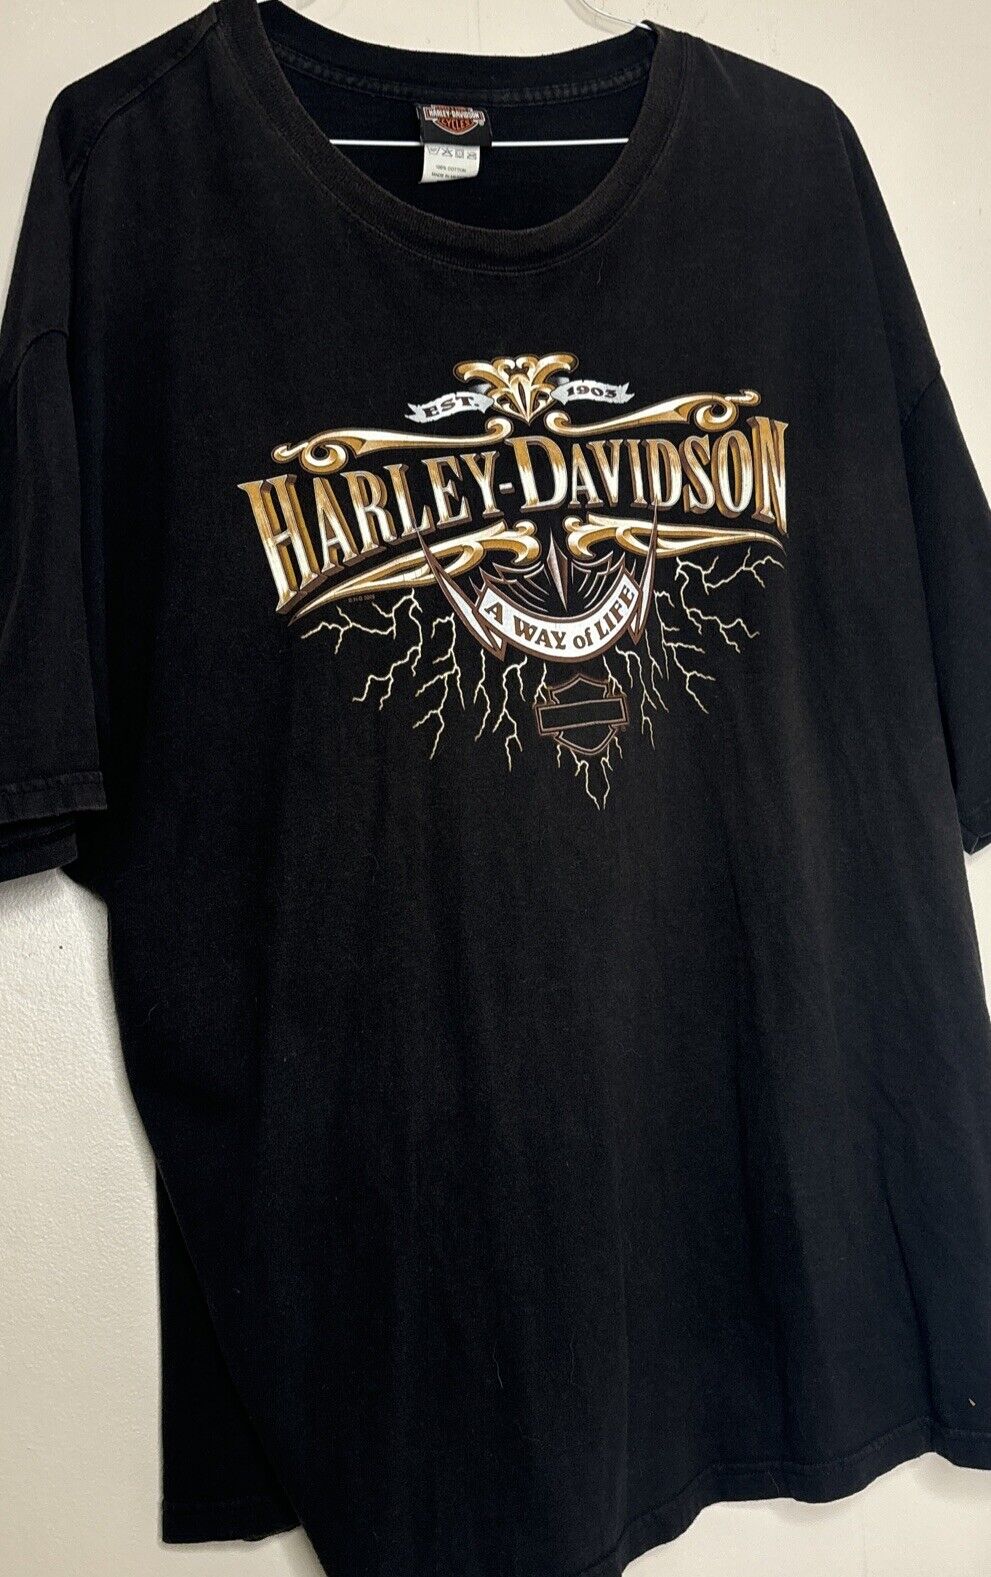 Paris Texas Harley Davidson T-shirt Size 3 Xl